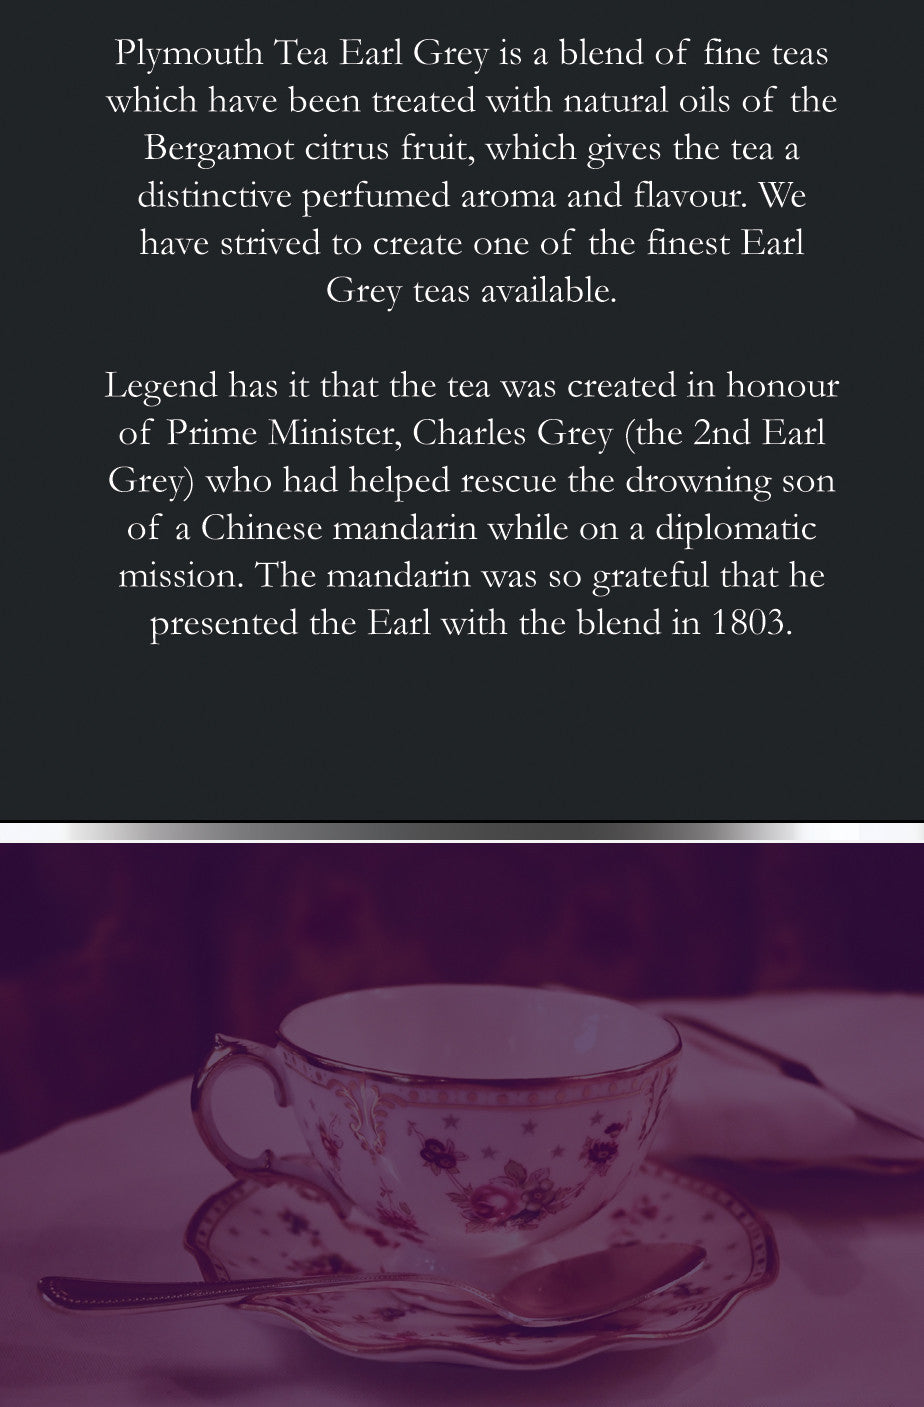 Plymouth Tea - Luxus Tea - Earl Grey Tea - Vissza